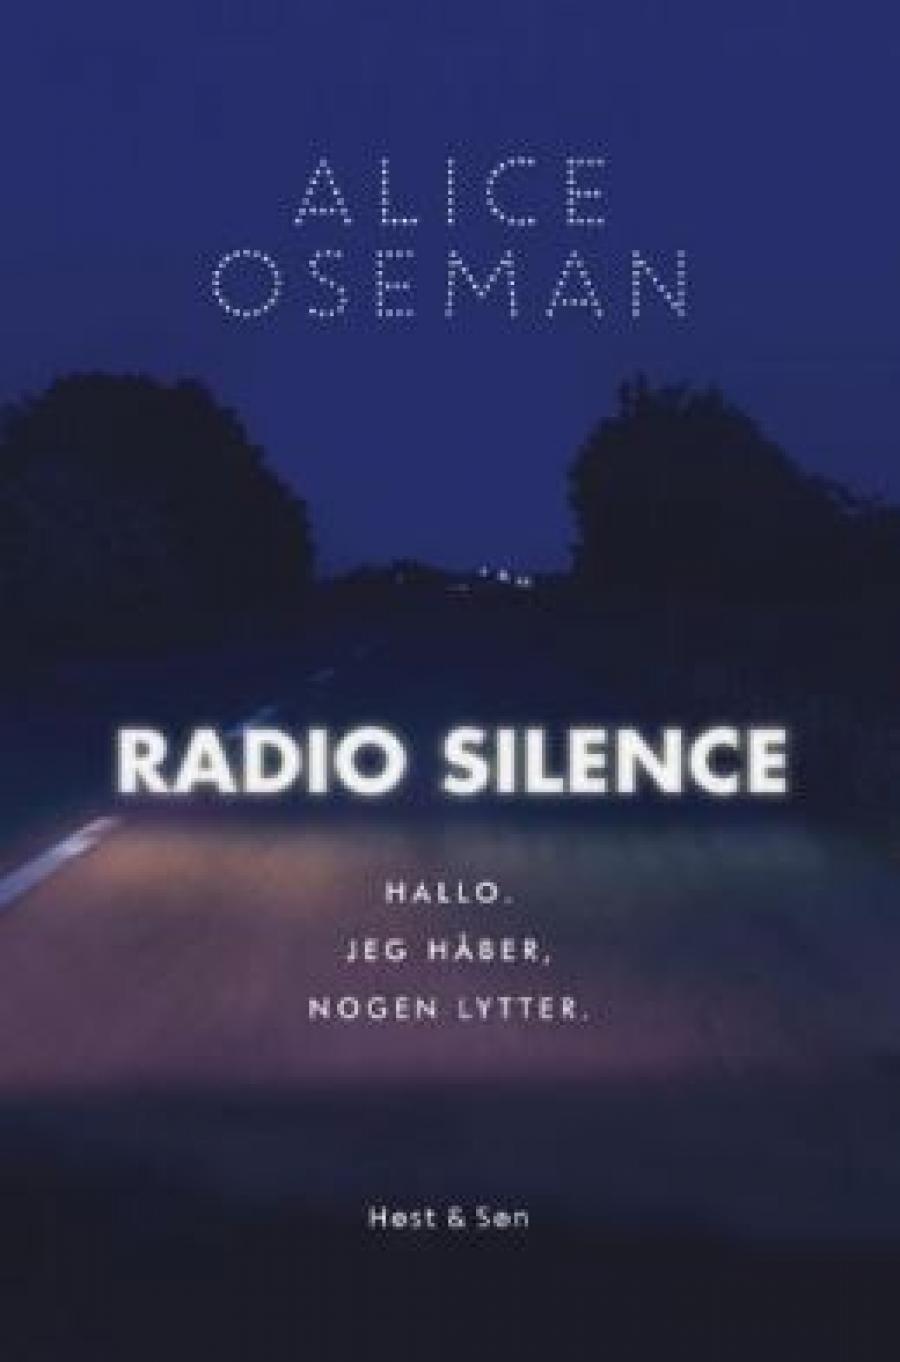 Alice Oseman, "Radio Silence"